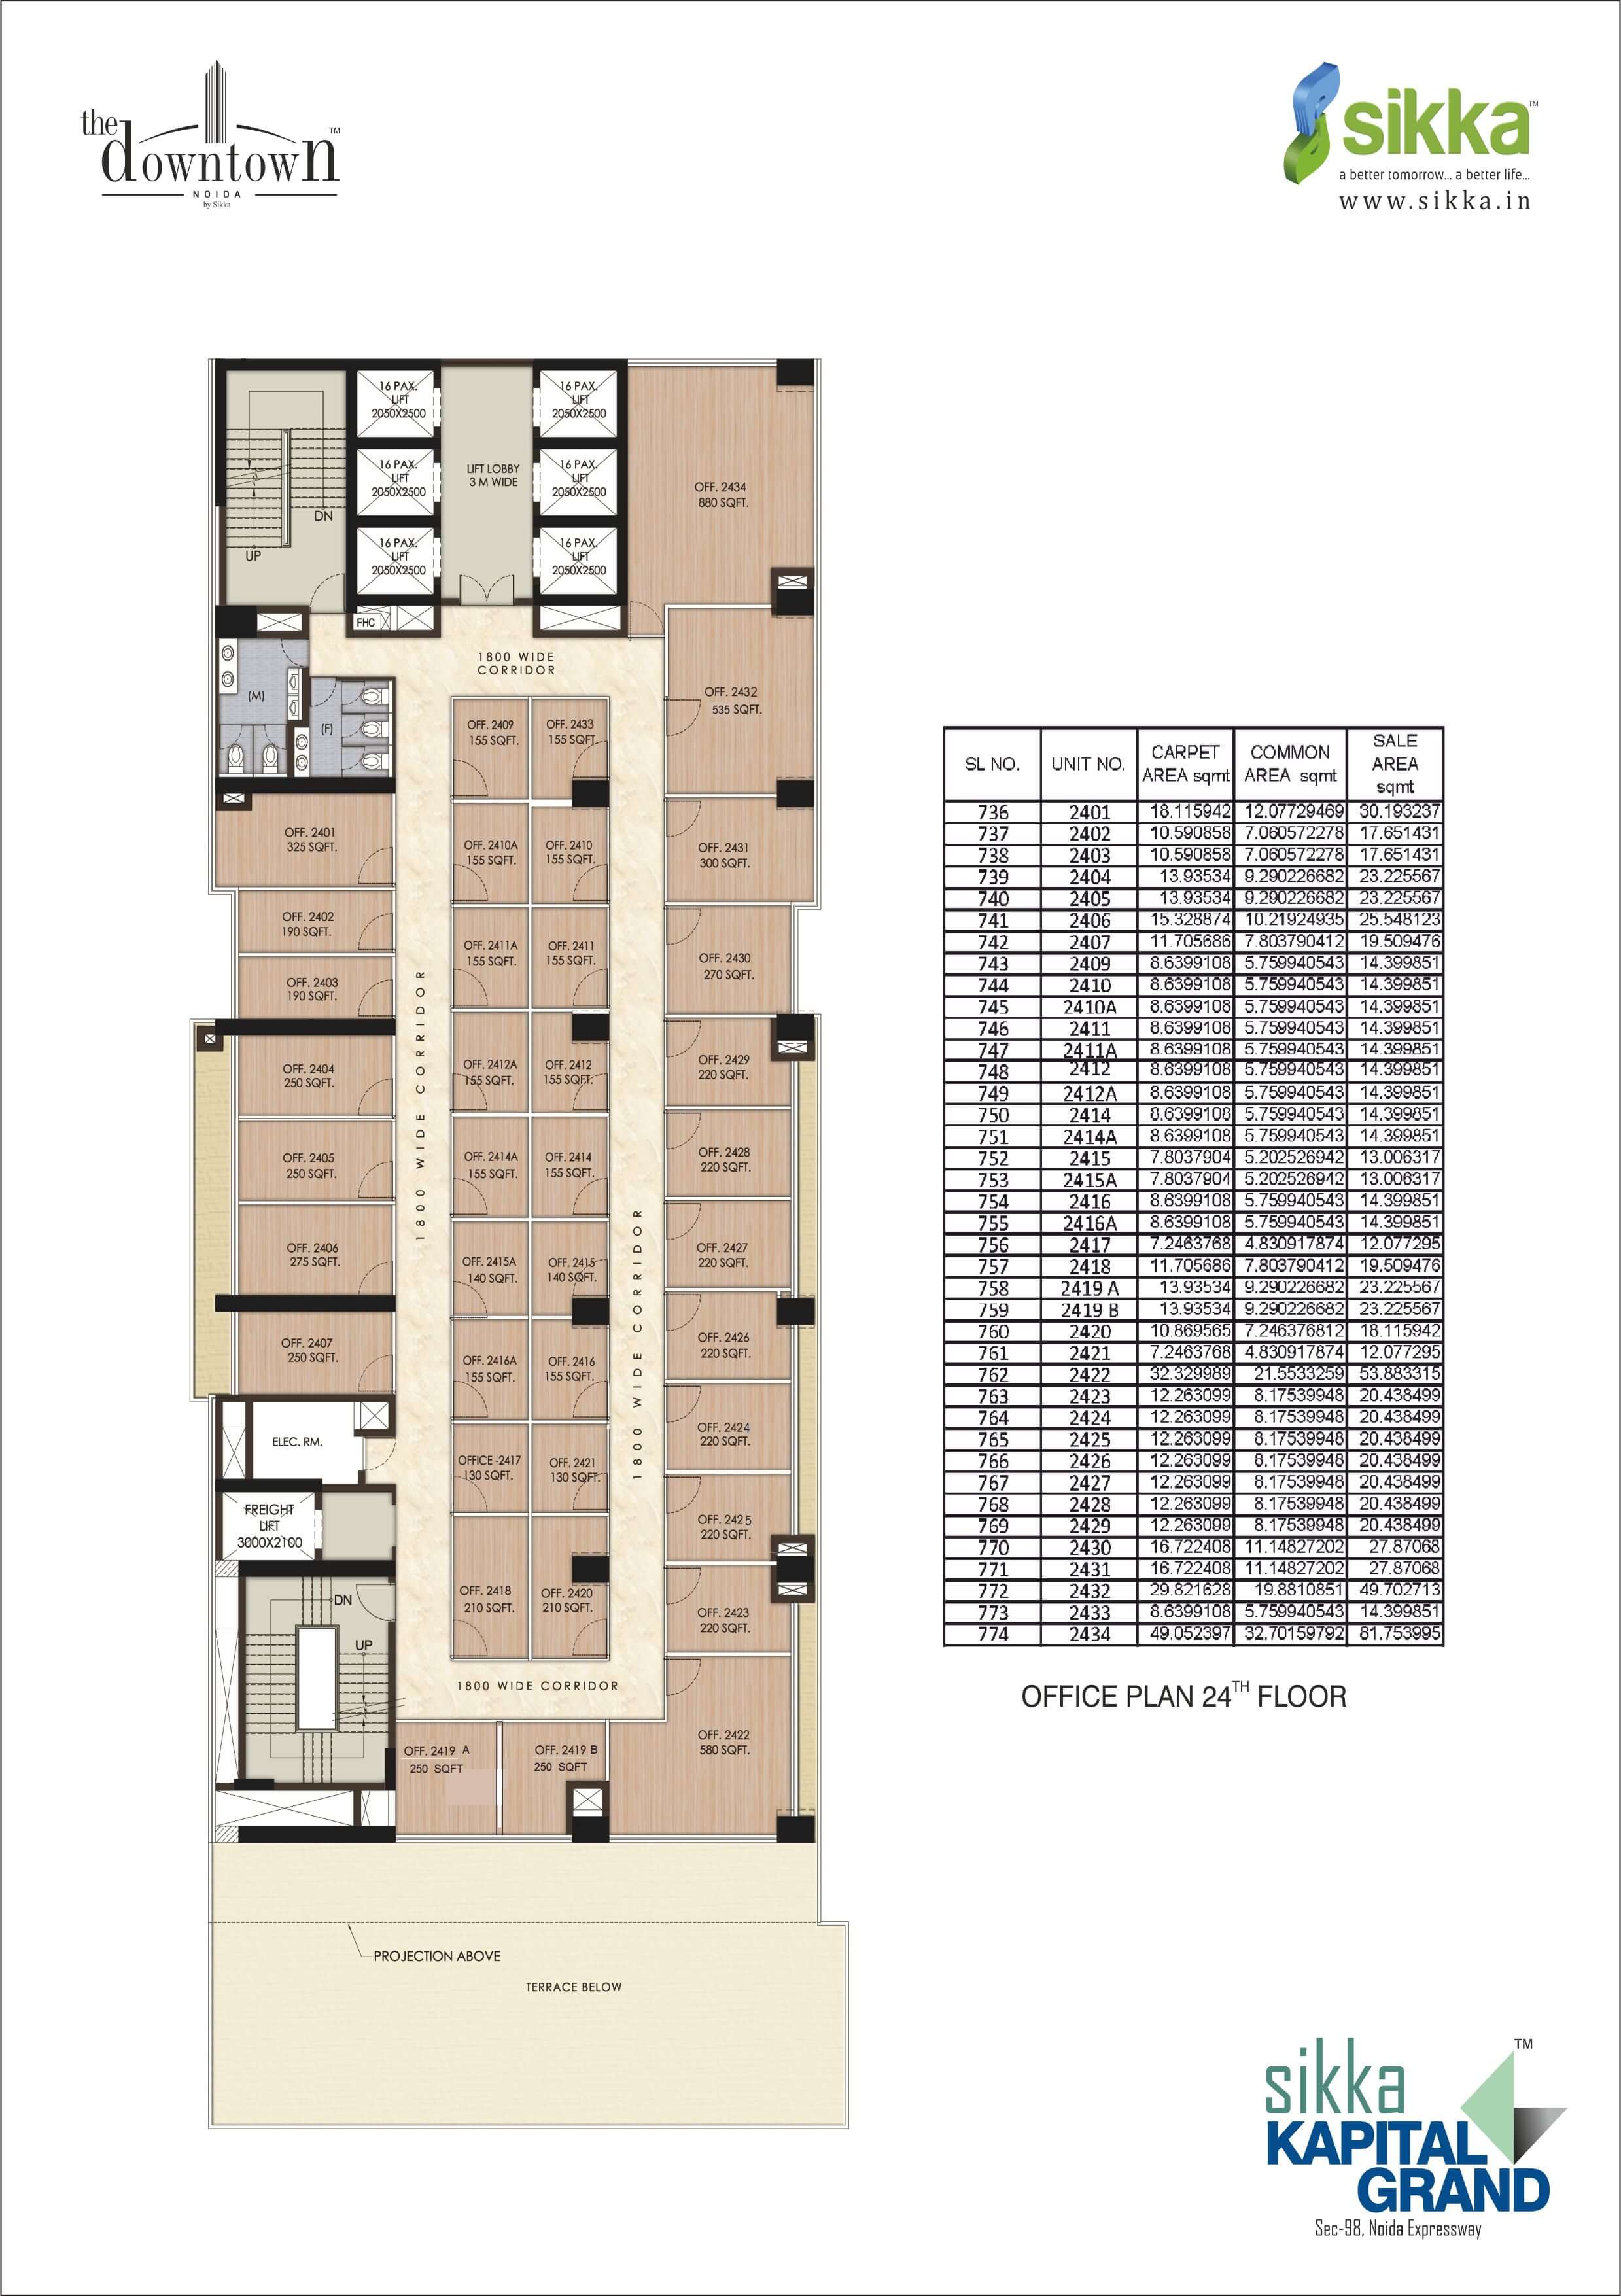 Kapital Grand - Office Plan 24th Floor